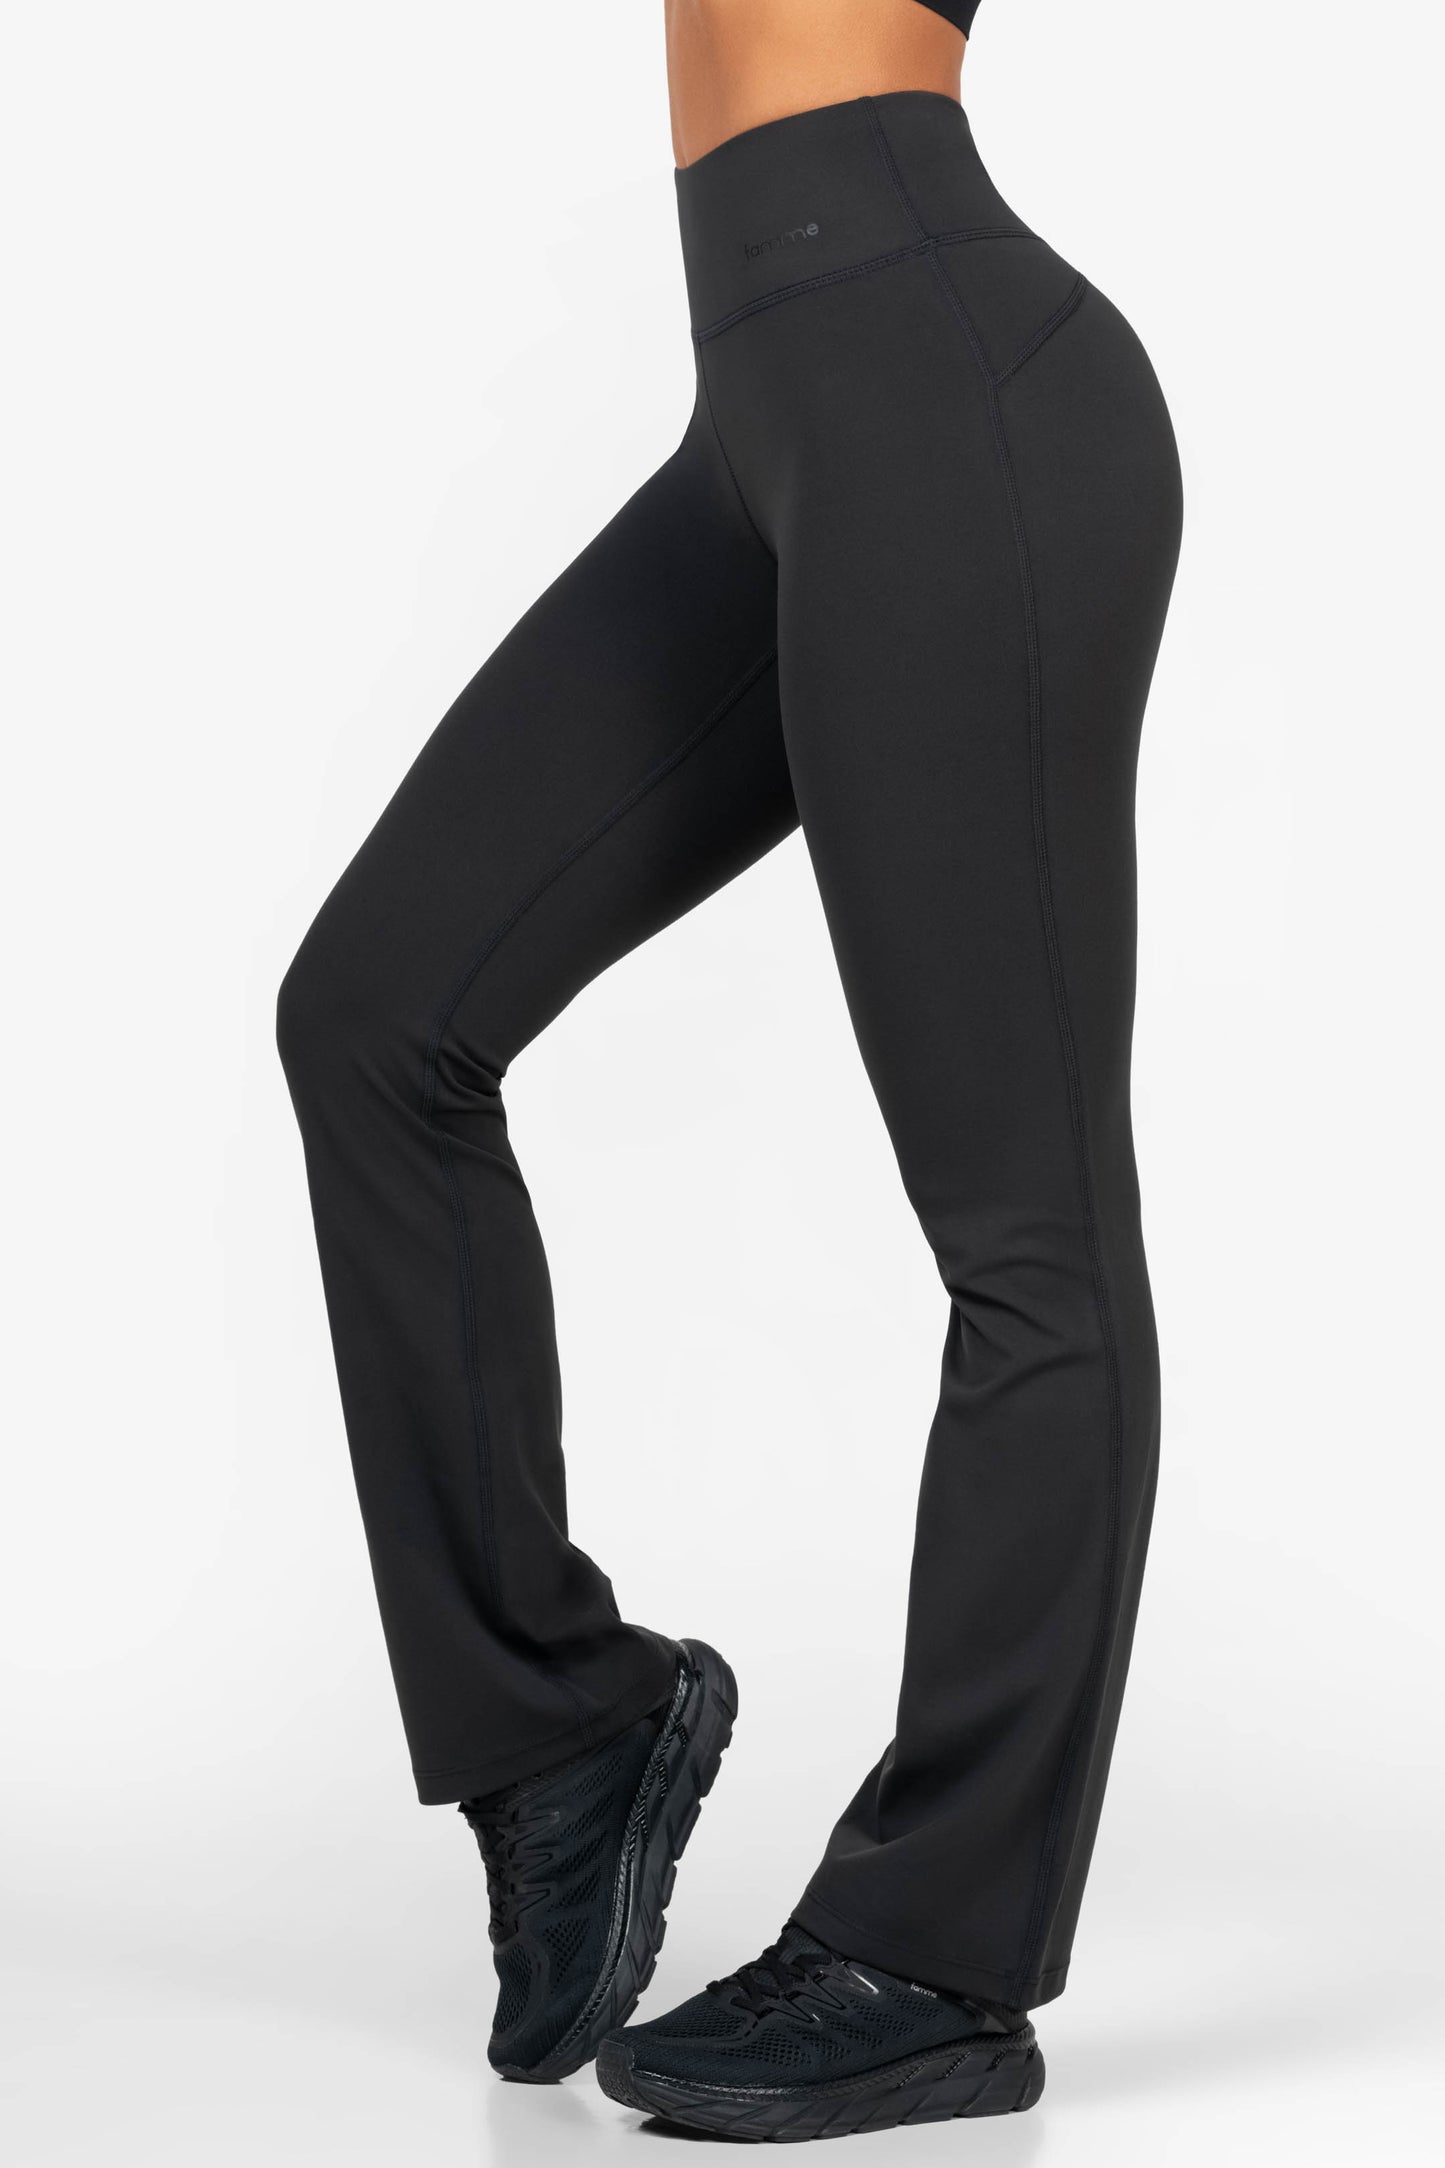 Black Yoga Pants - for dame - Famme - Pants